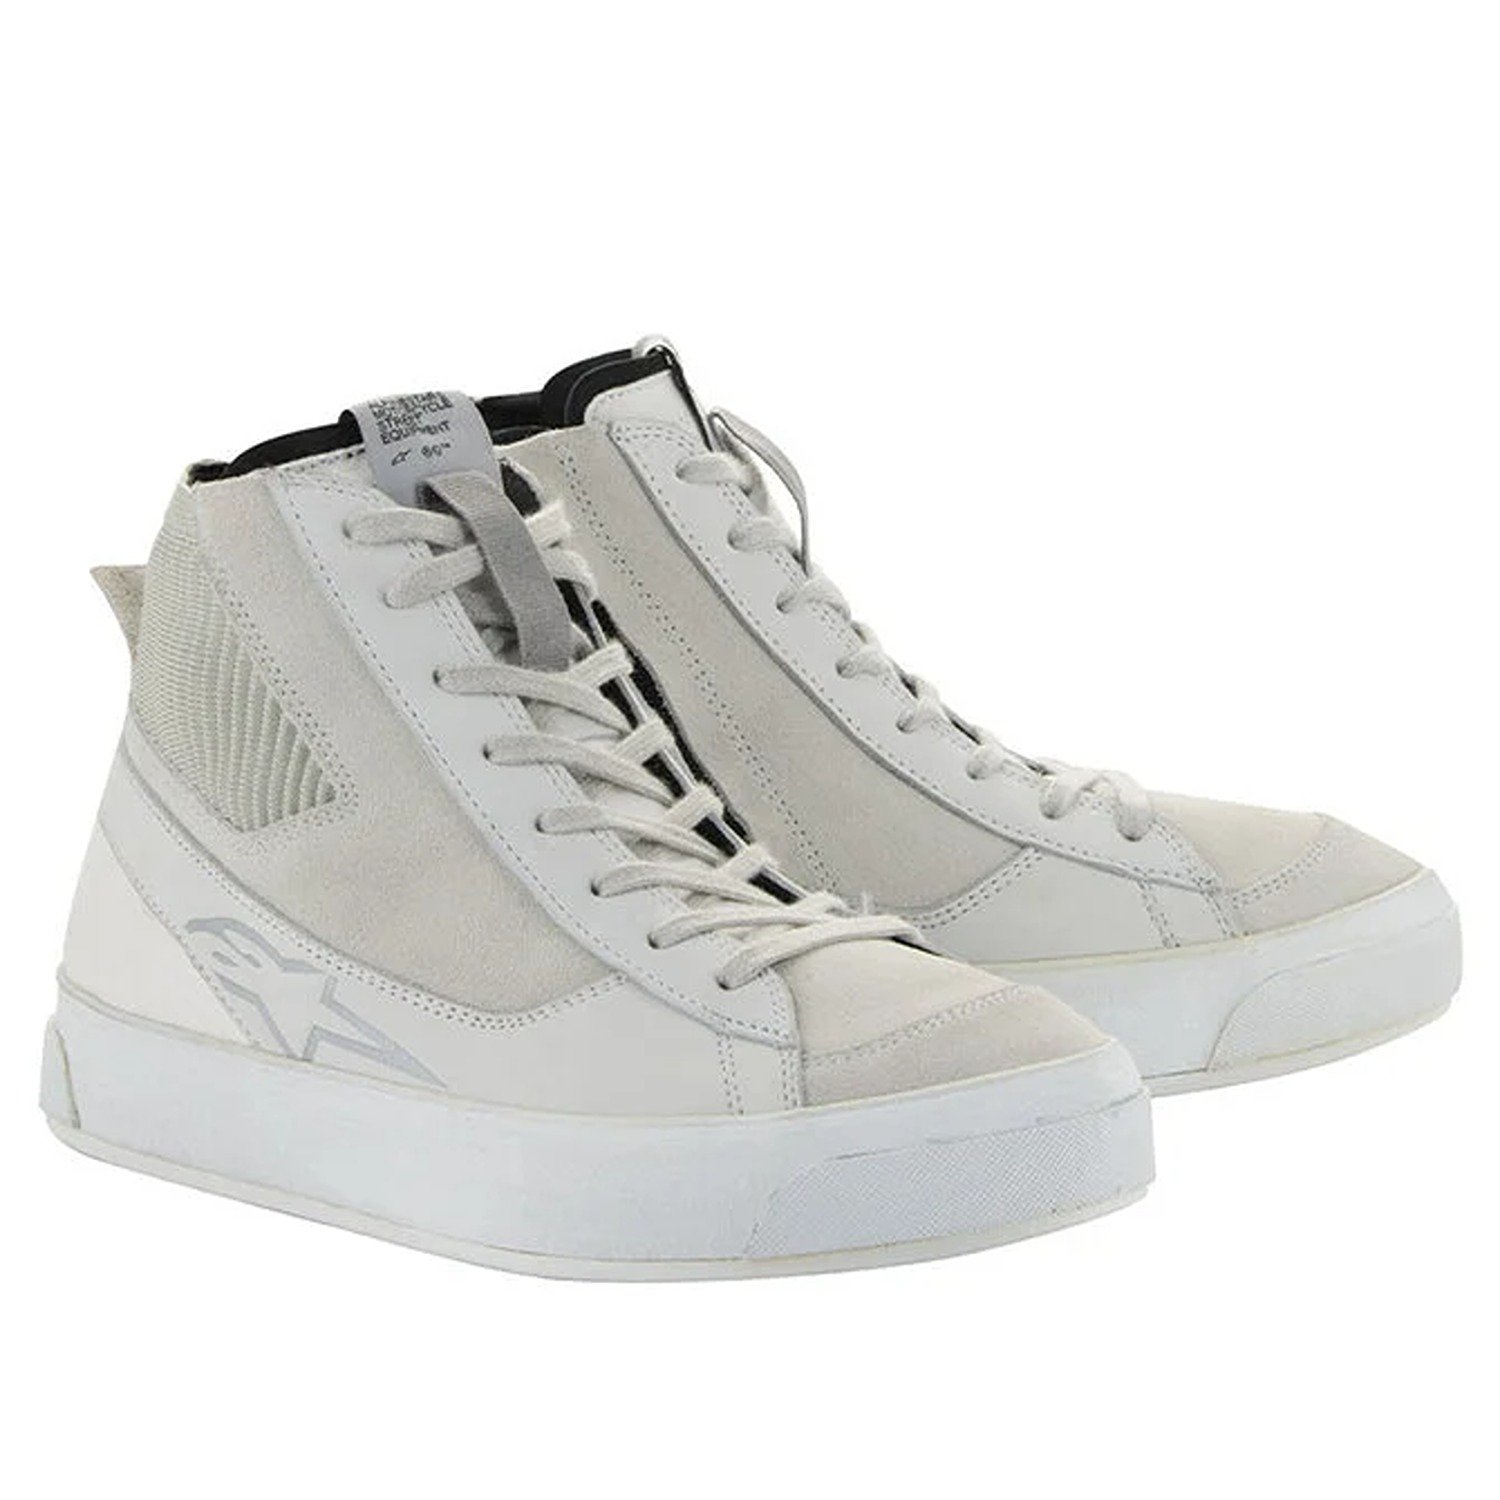 Image of EU Alpinestars Stella Stated Podium Shoes White Cool Gray Taille US 10